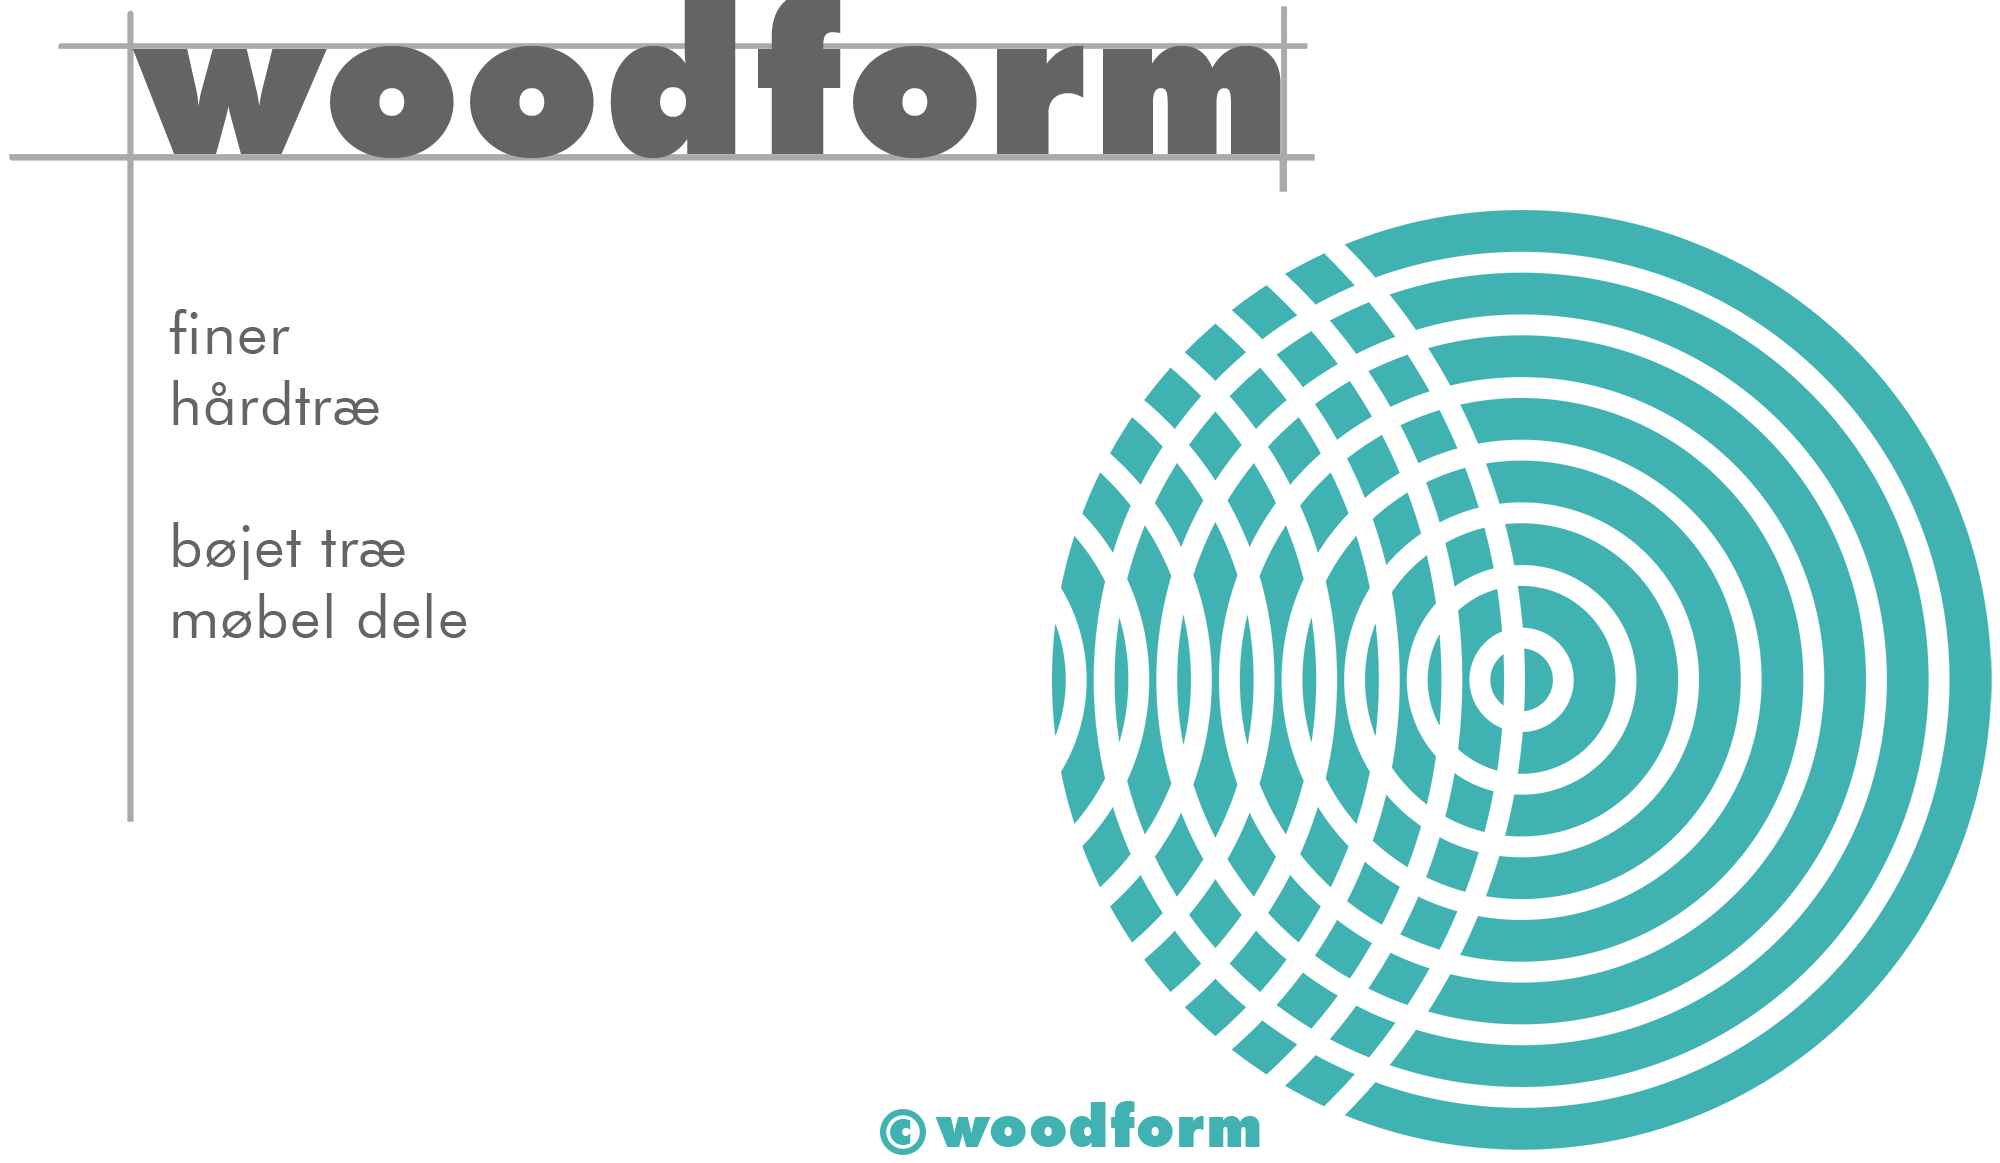 Woodform logo